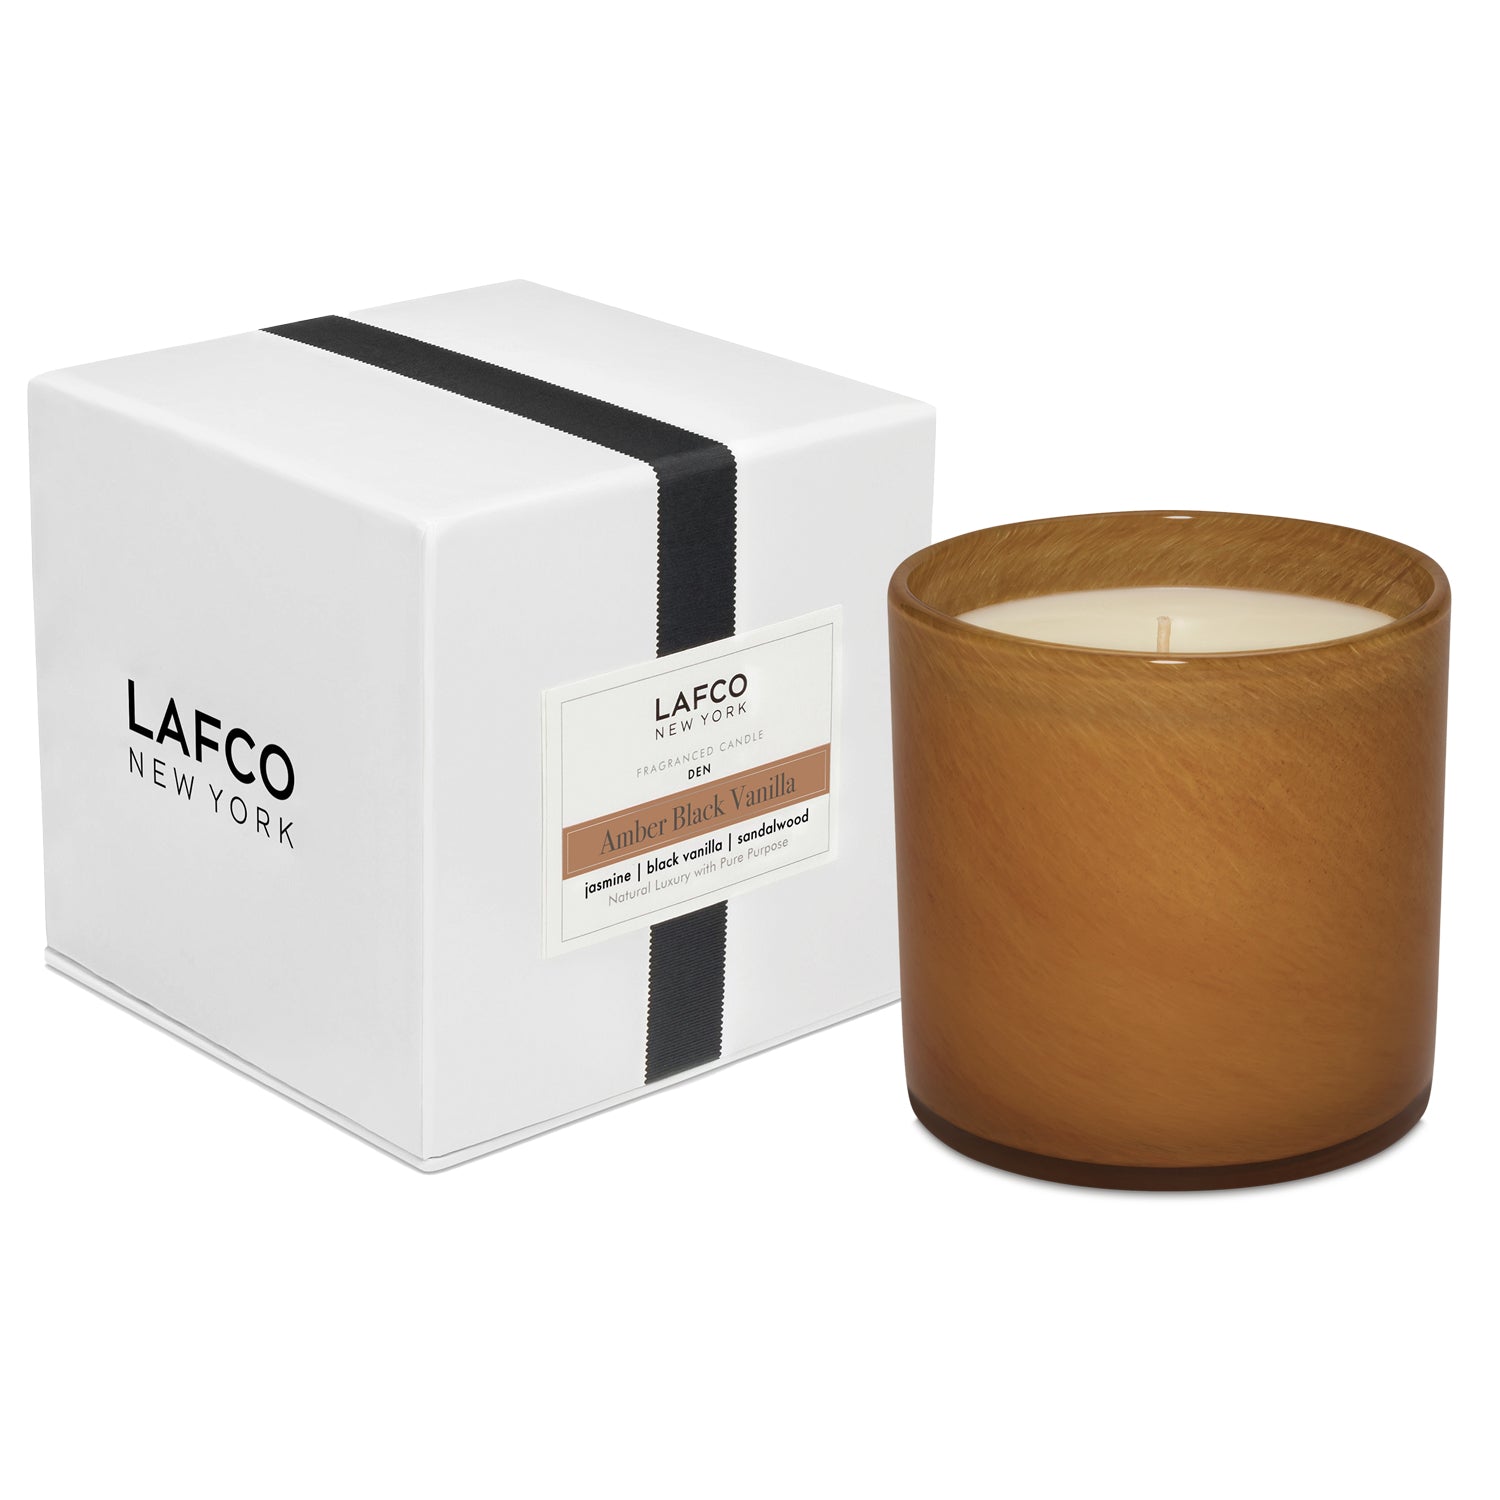 LAFCO 15.5 oz Foyer (Amber Black Vanilla) Candle